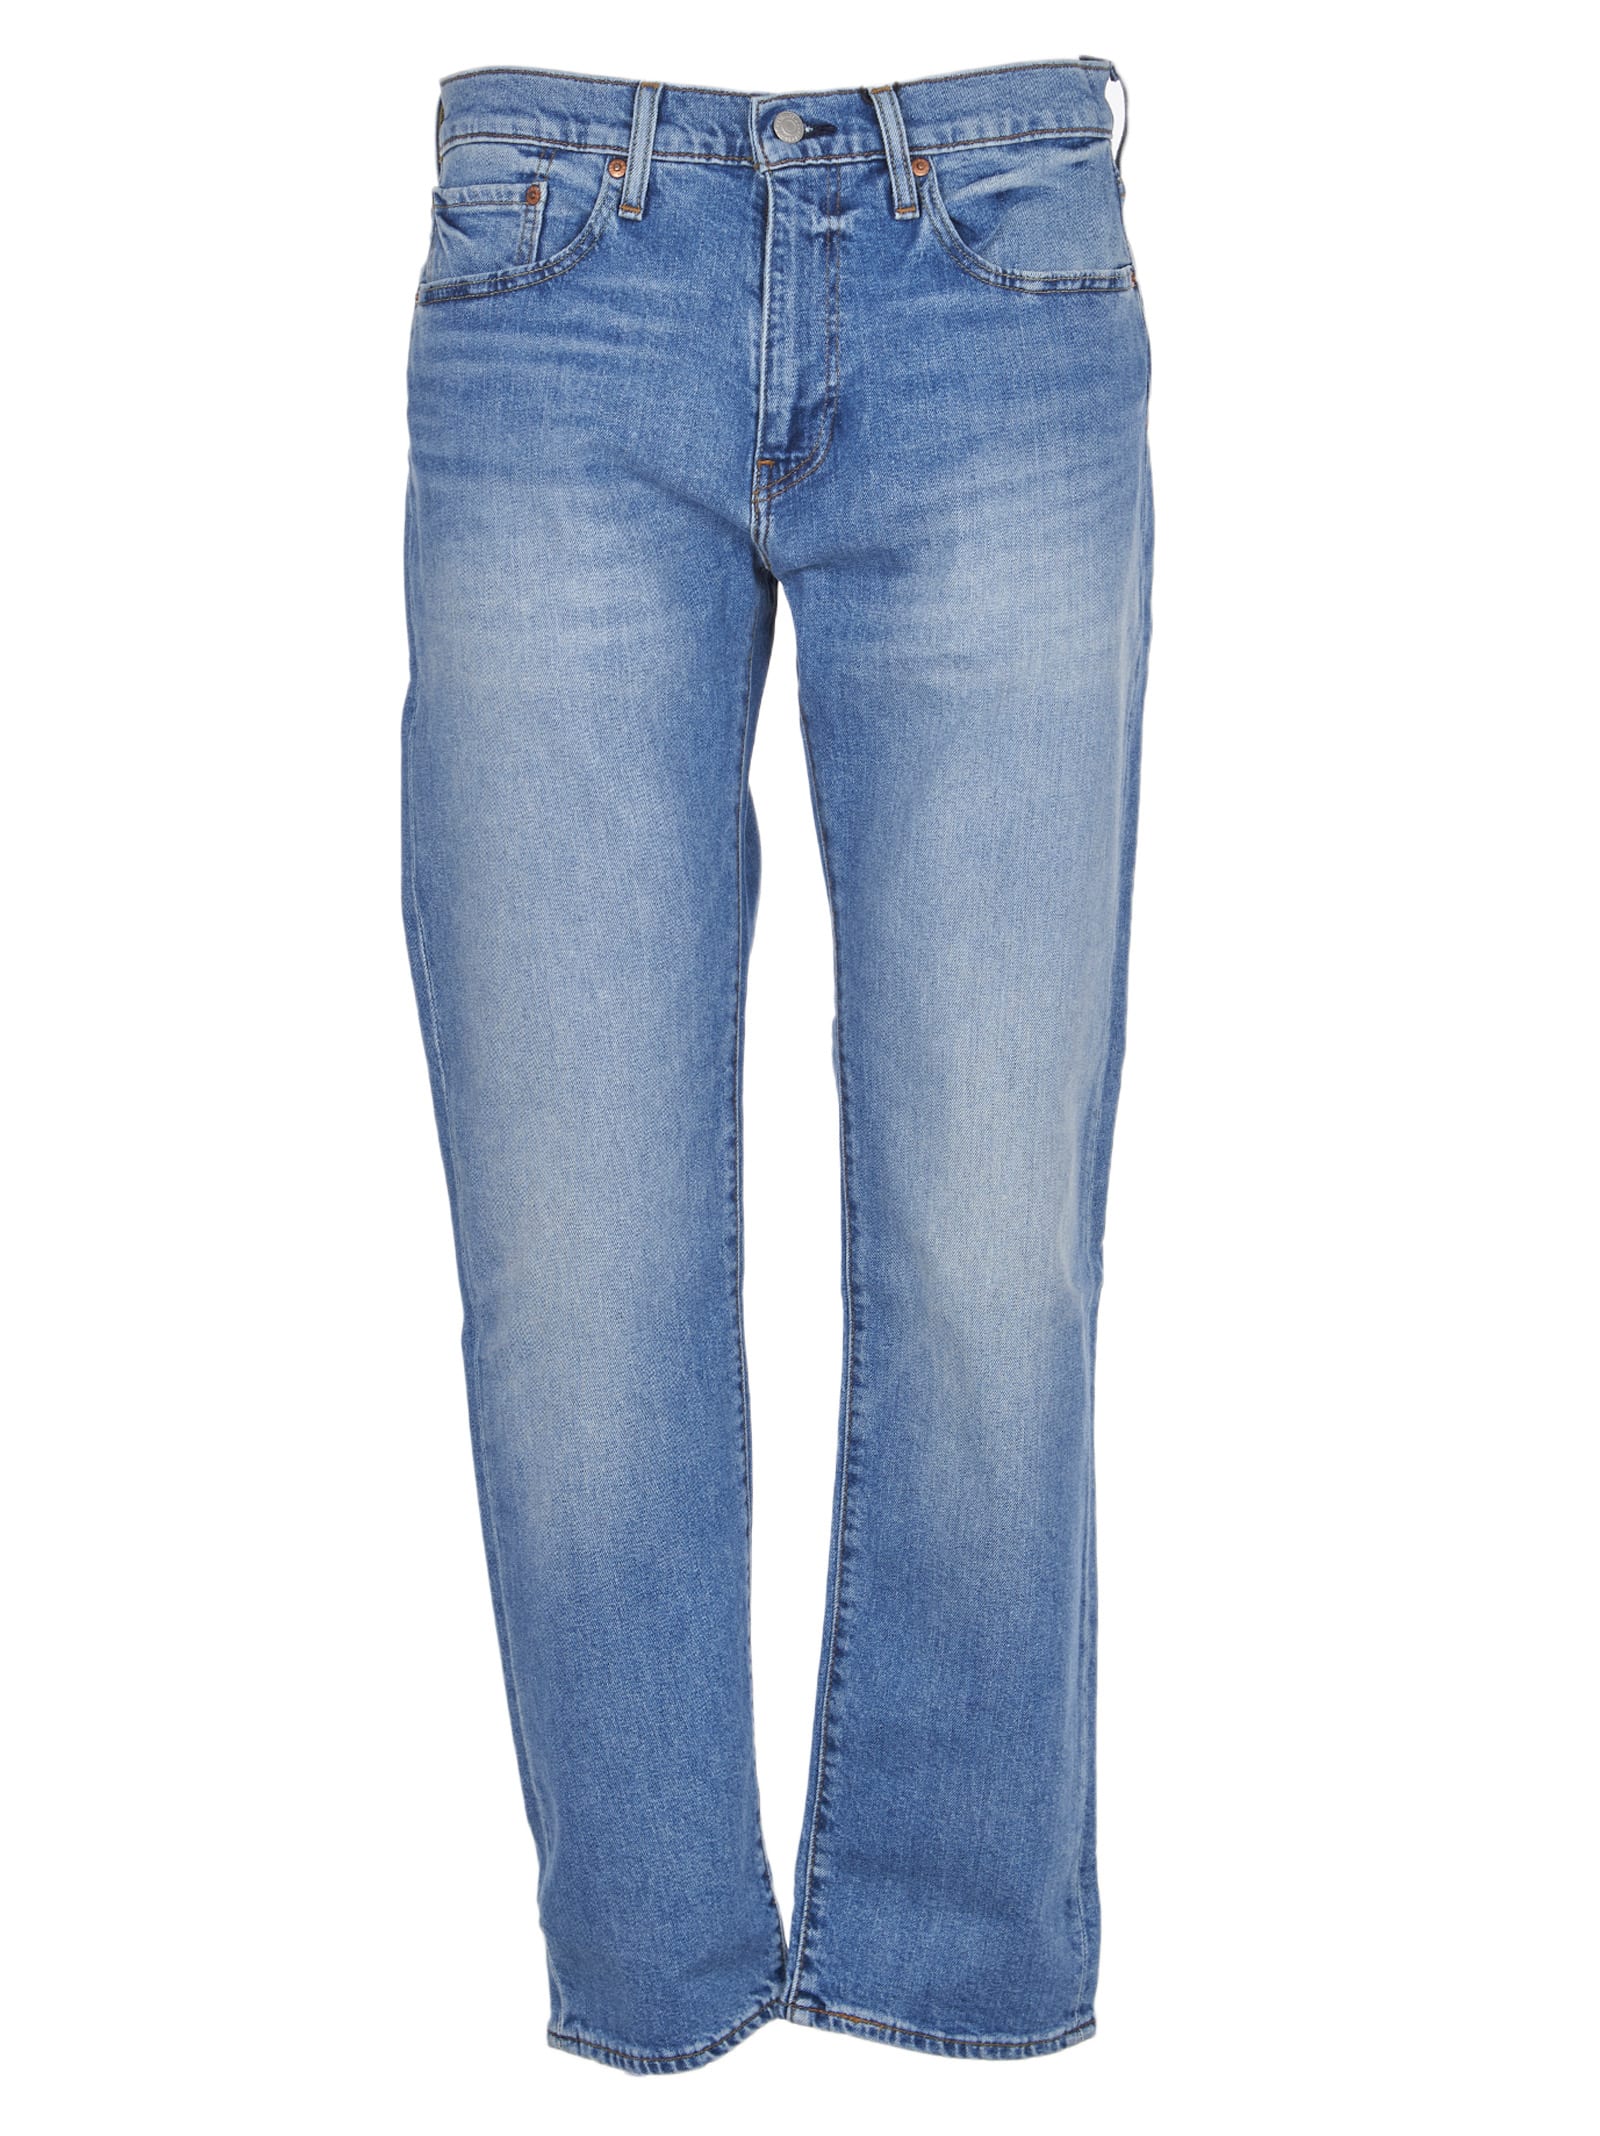 levi's light blue jeans